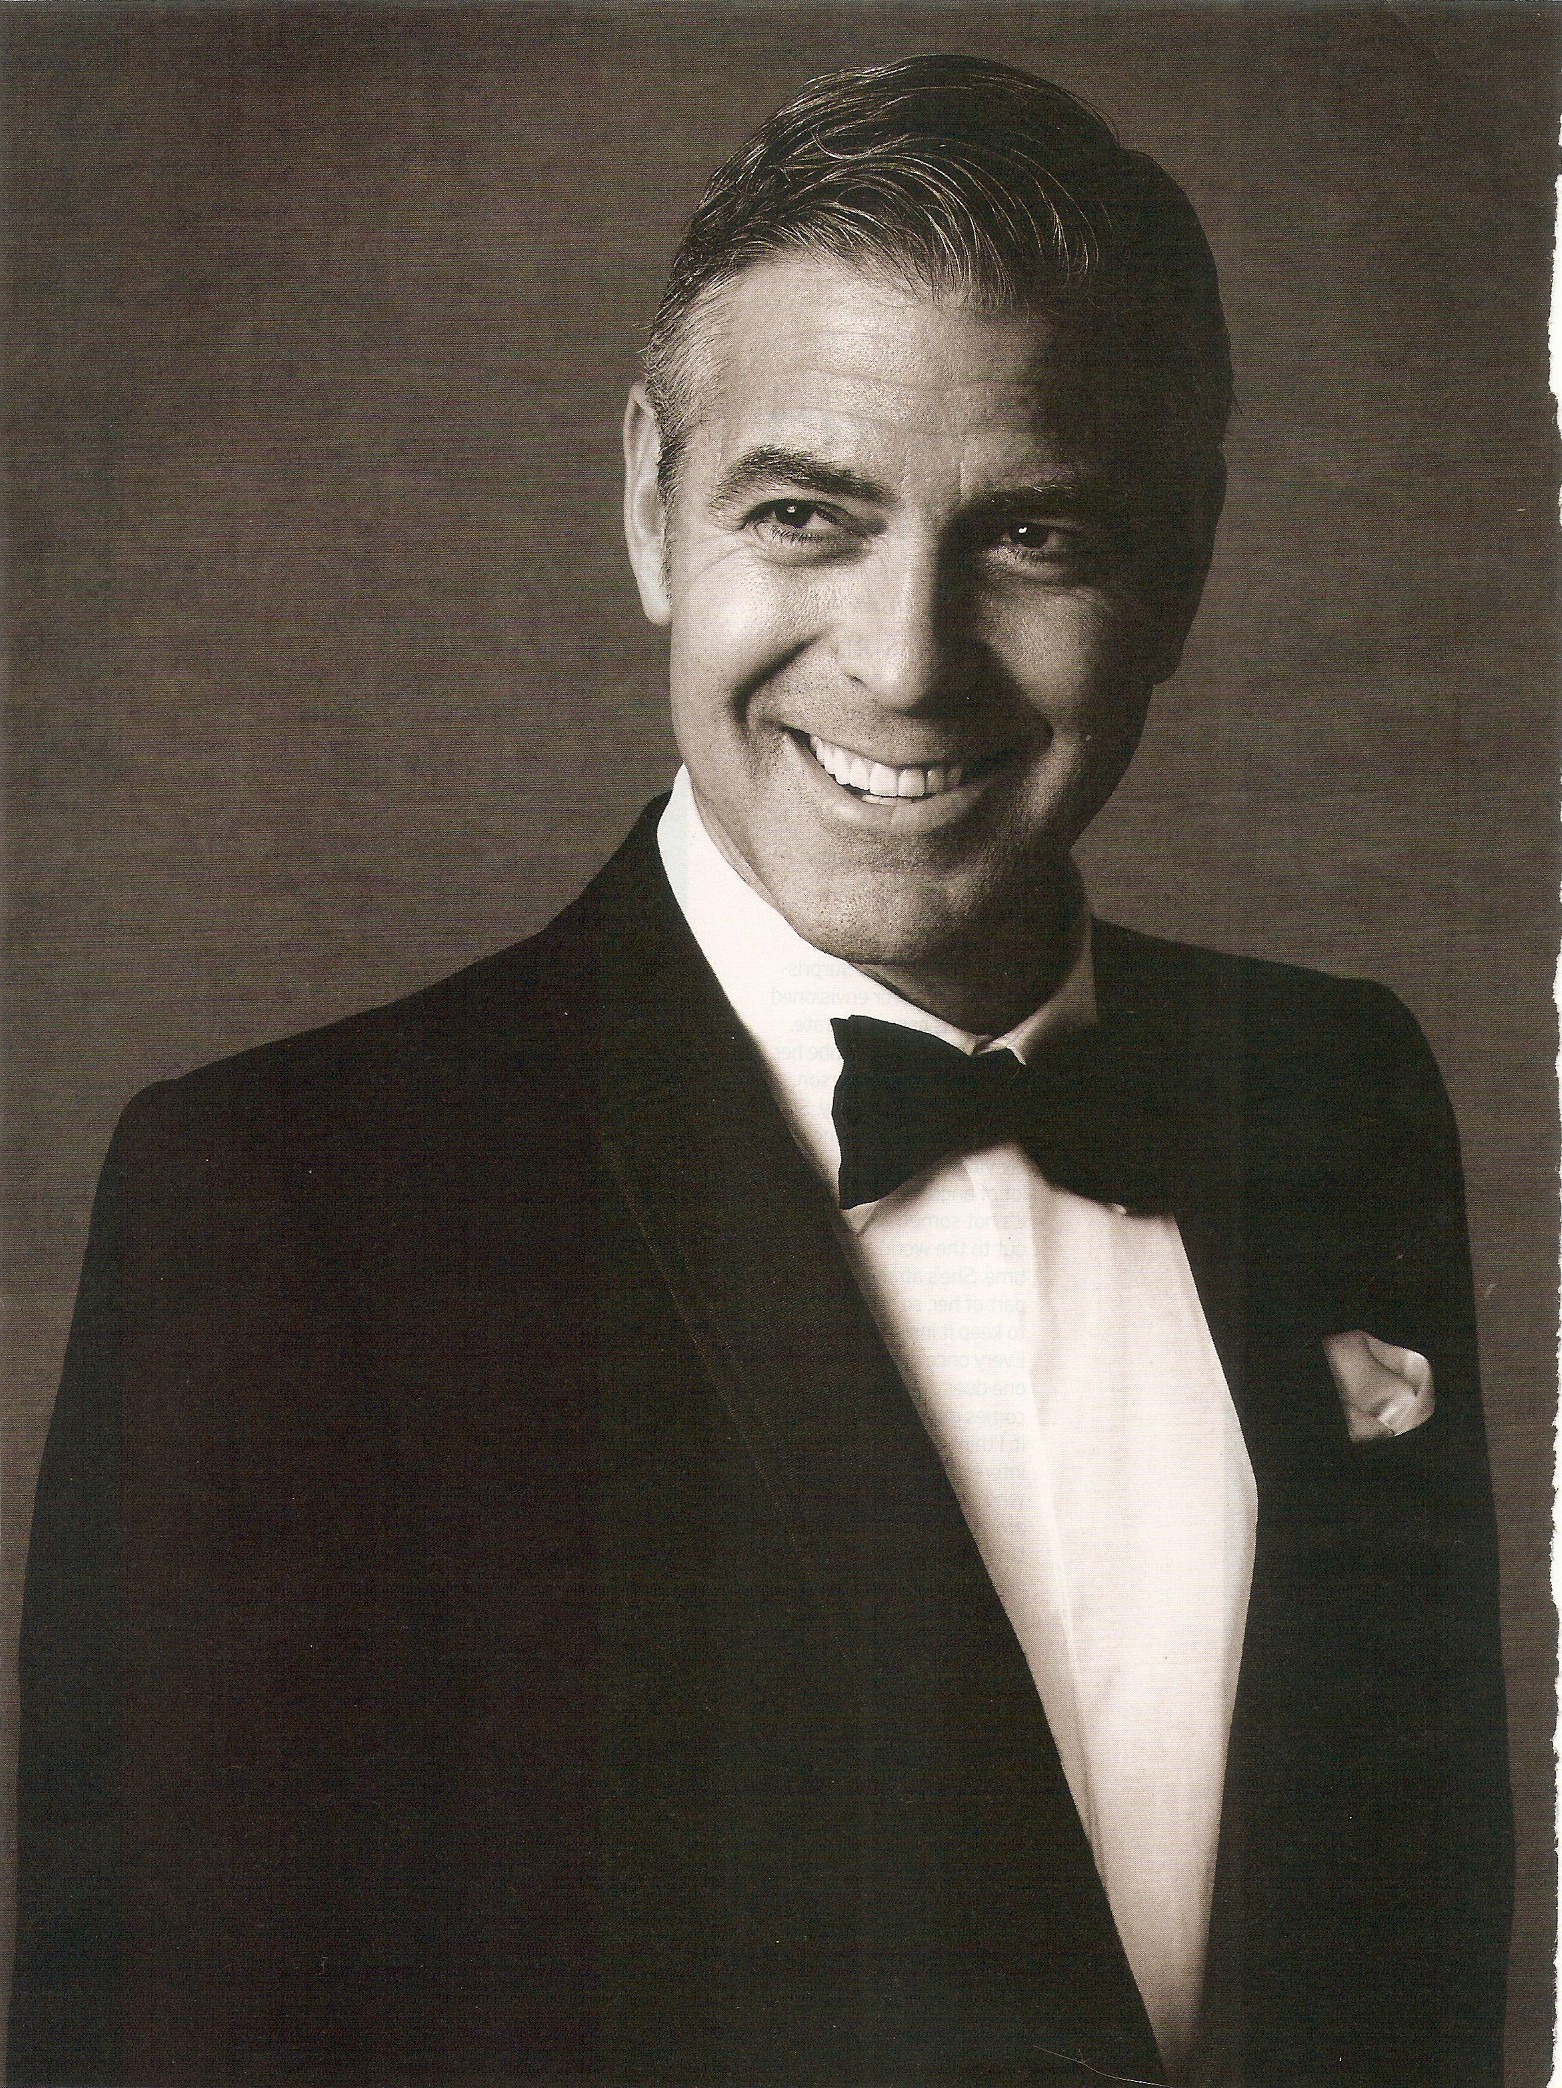 George Clooney - Entertainment Weekly